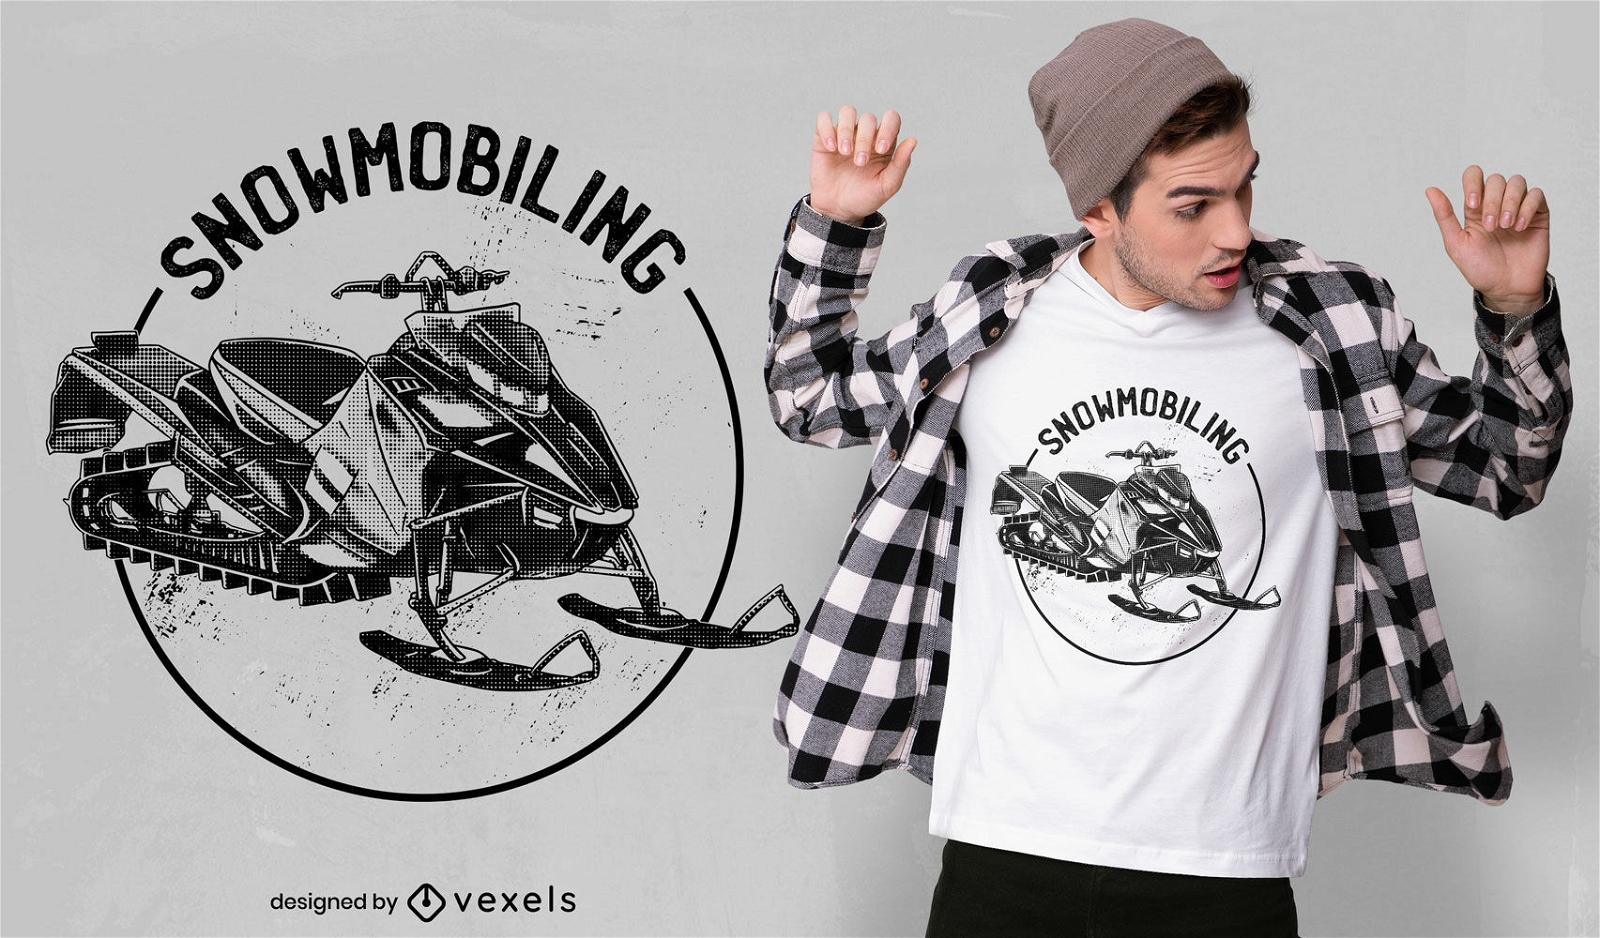 Snowmobiling t-shirt design